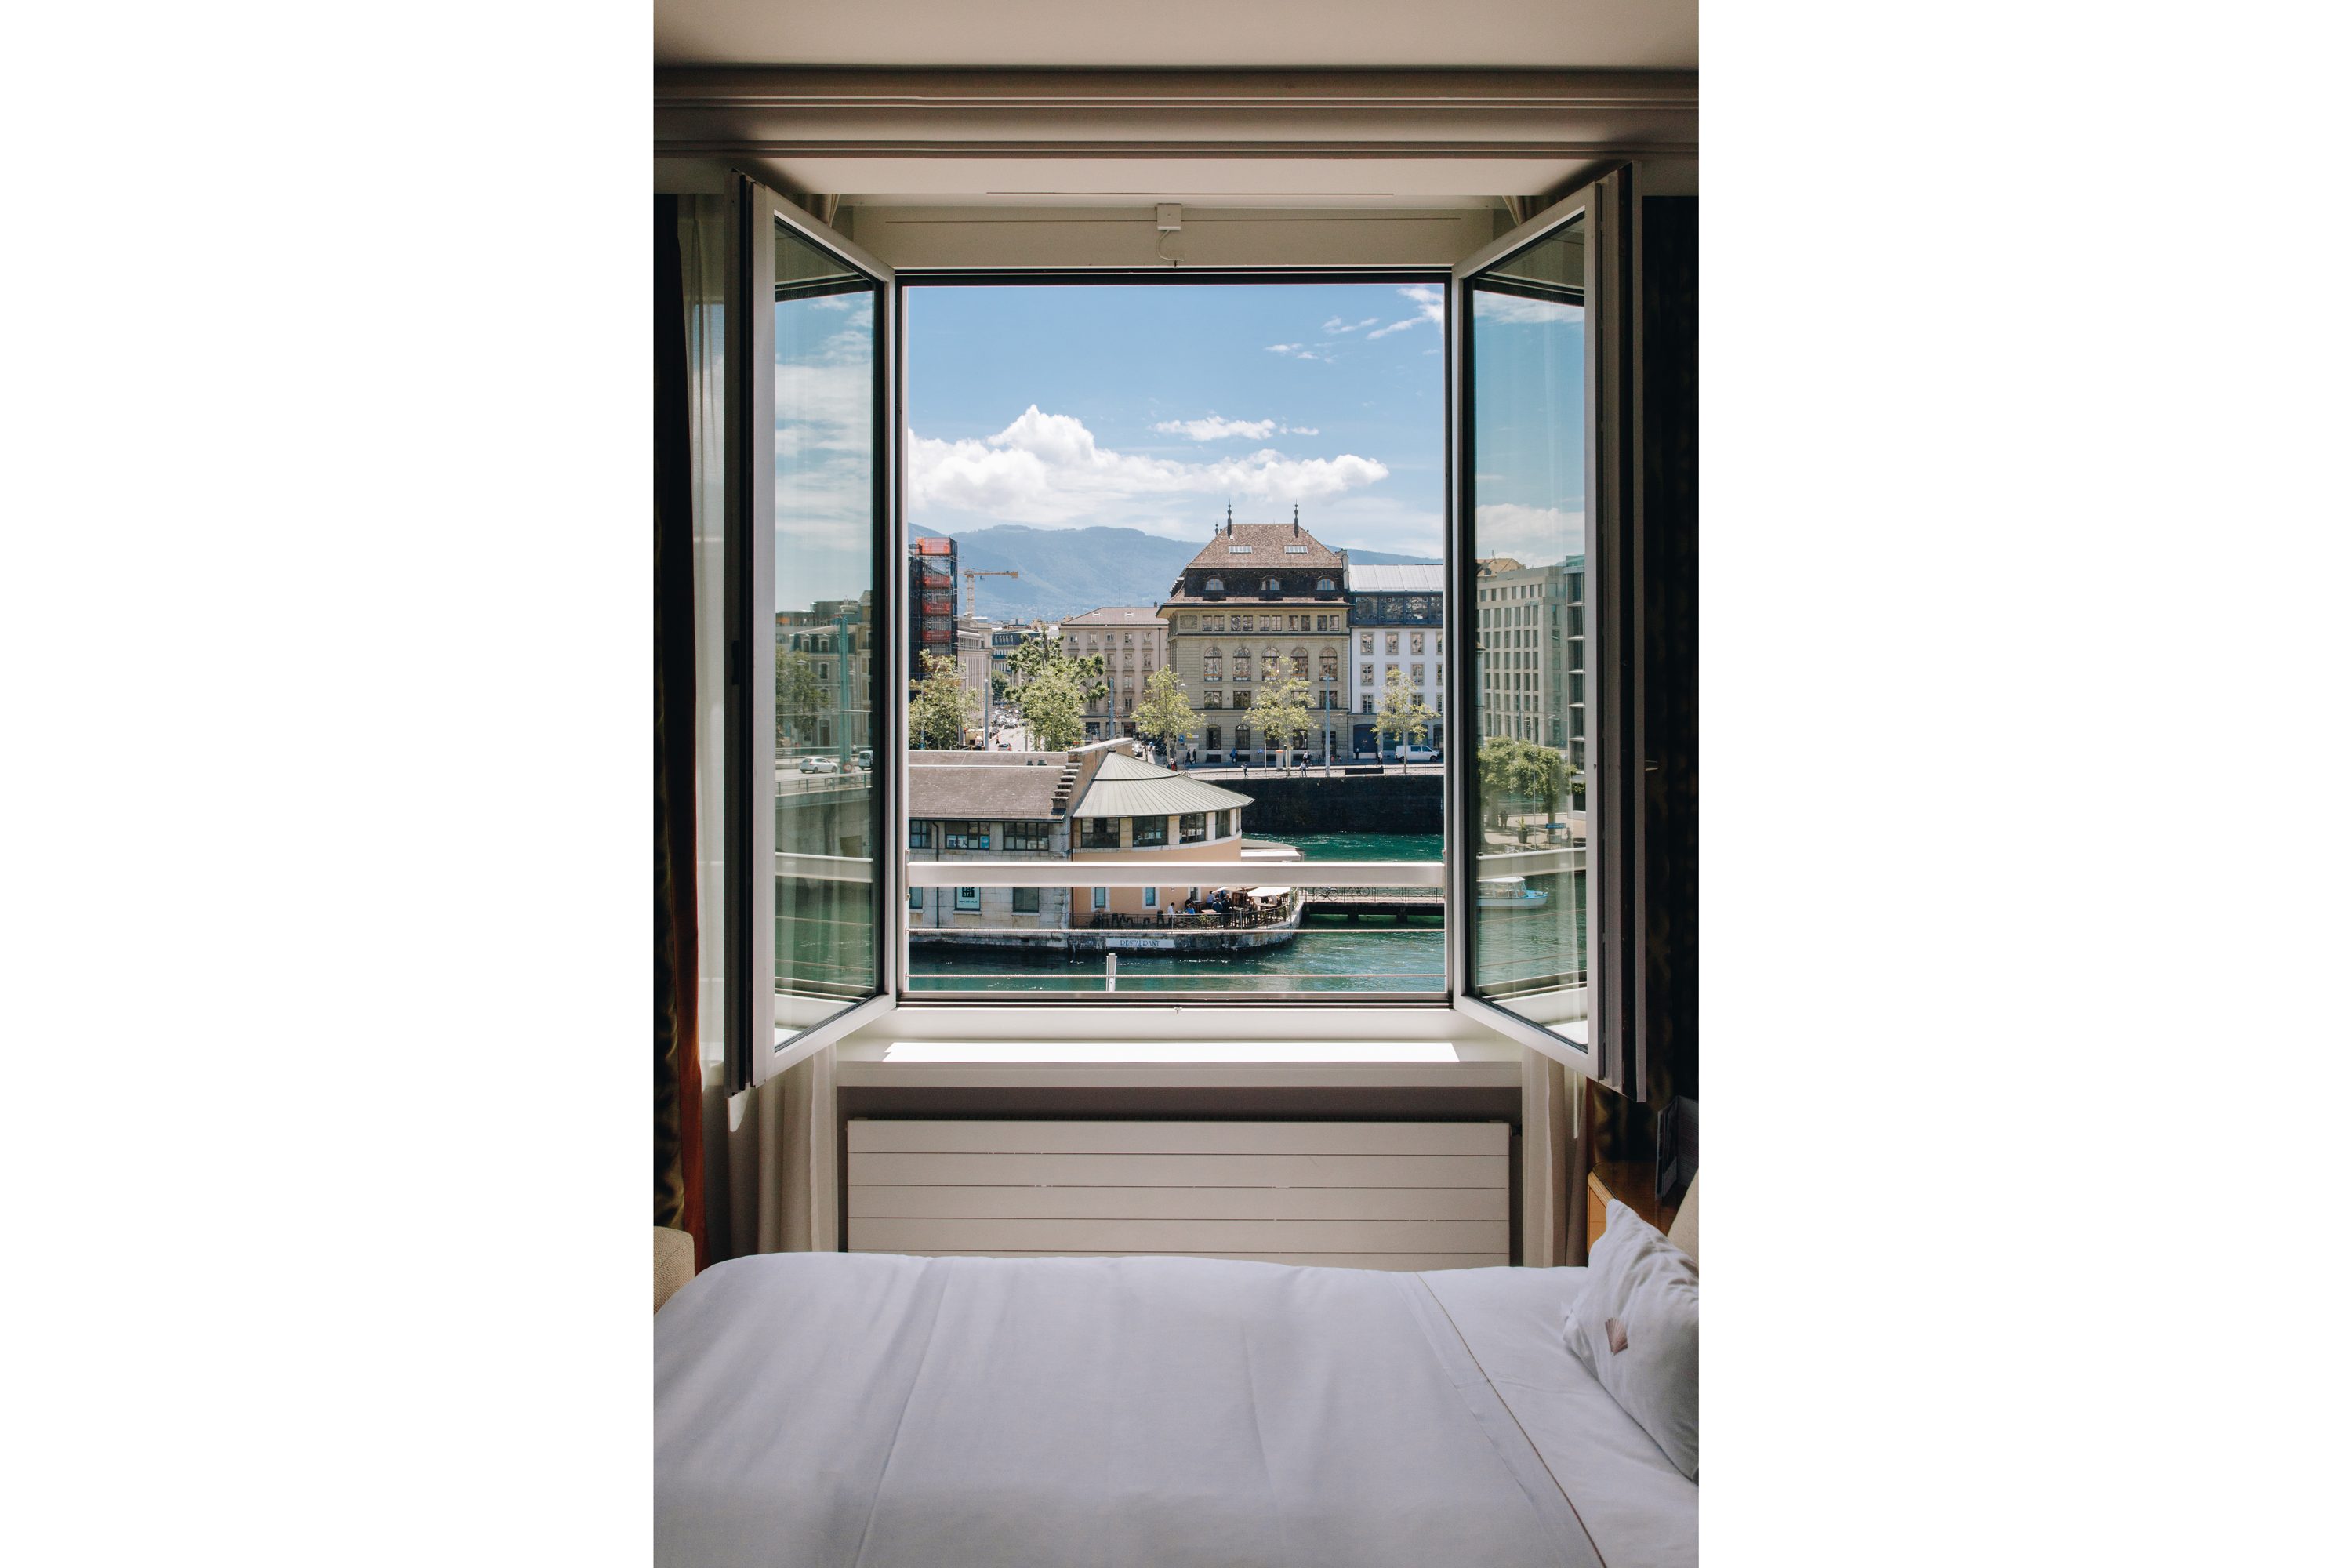 Water view from a room window at Mandarin Oriental, Geneva